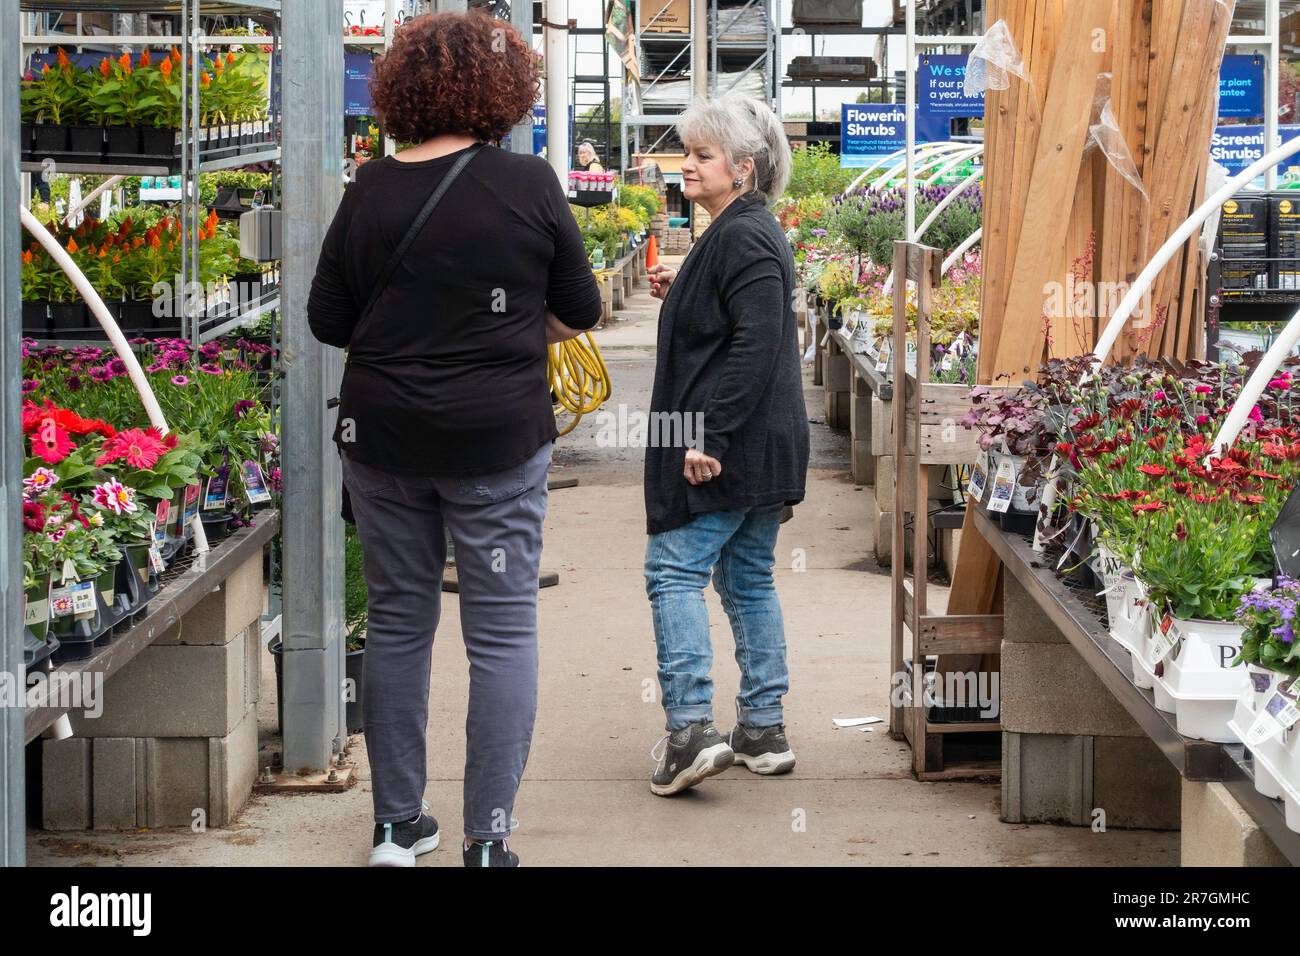 Two Caucasian women, one a senior, shop in Lowe's Garden center full of new spring bedding plants and gardening merchandise.  Wichita, Kansas, USA. Stock Photo